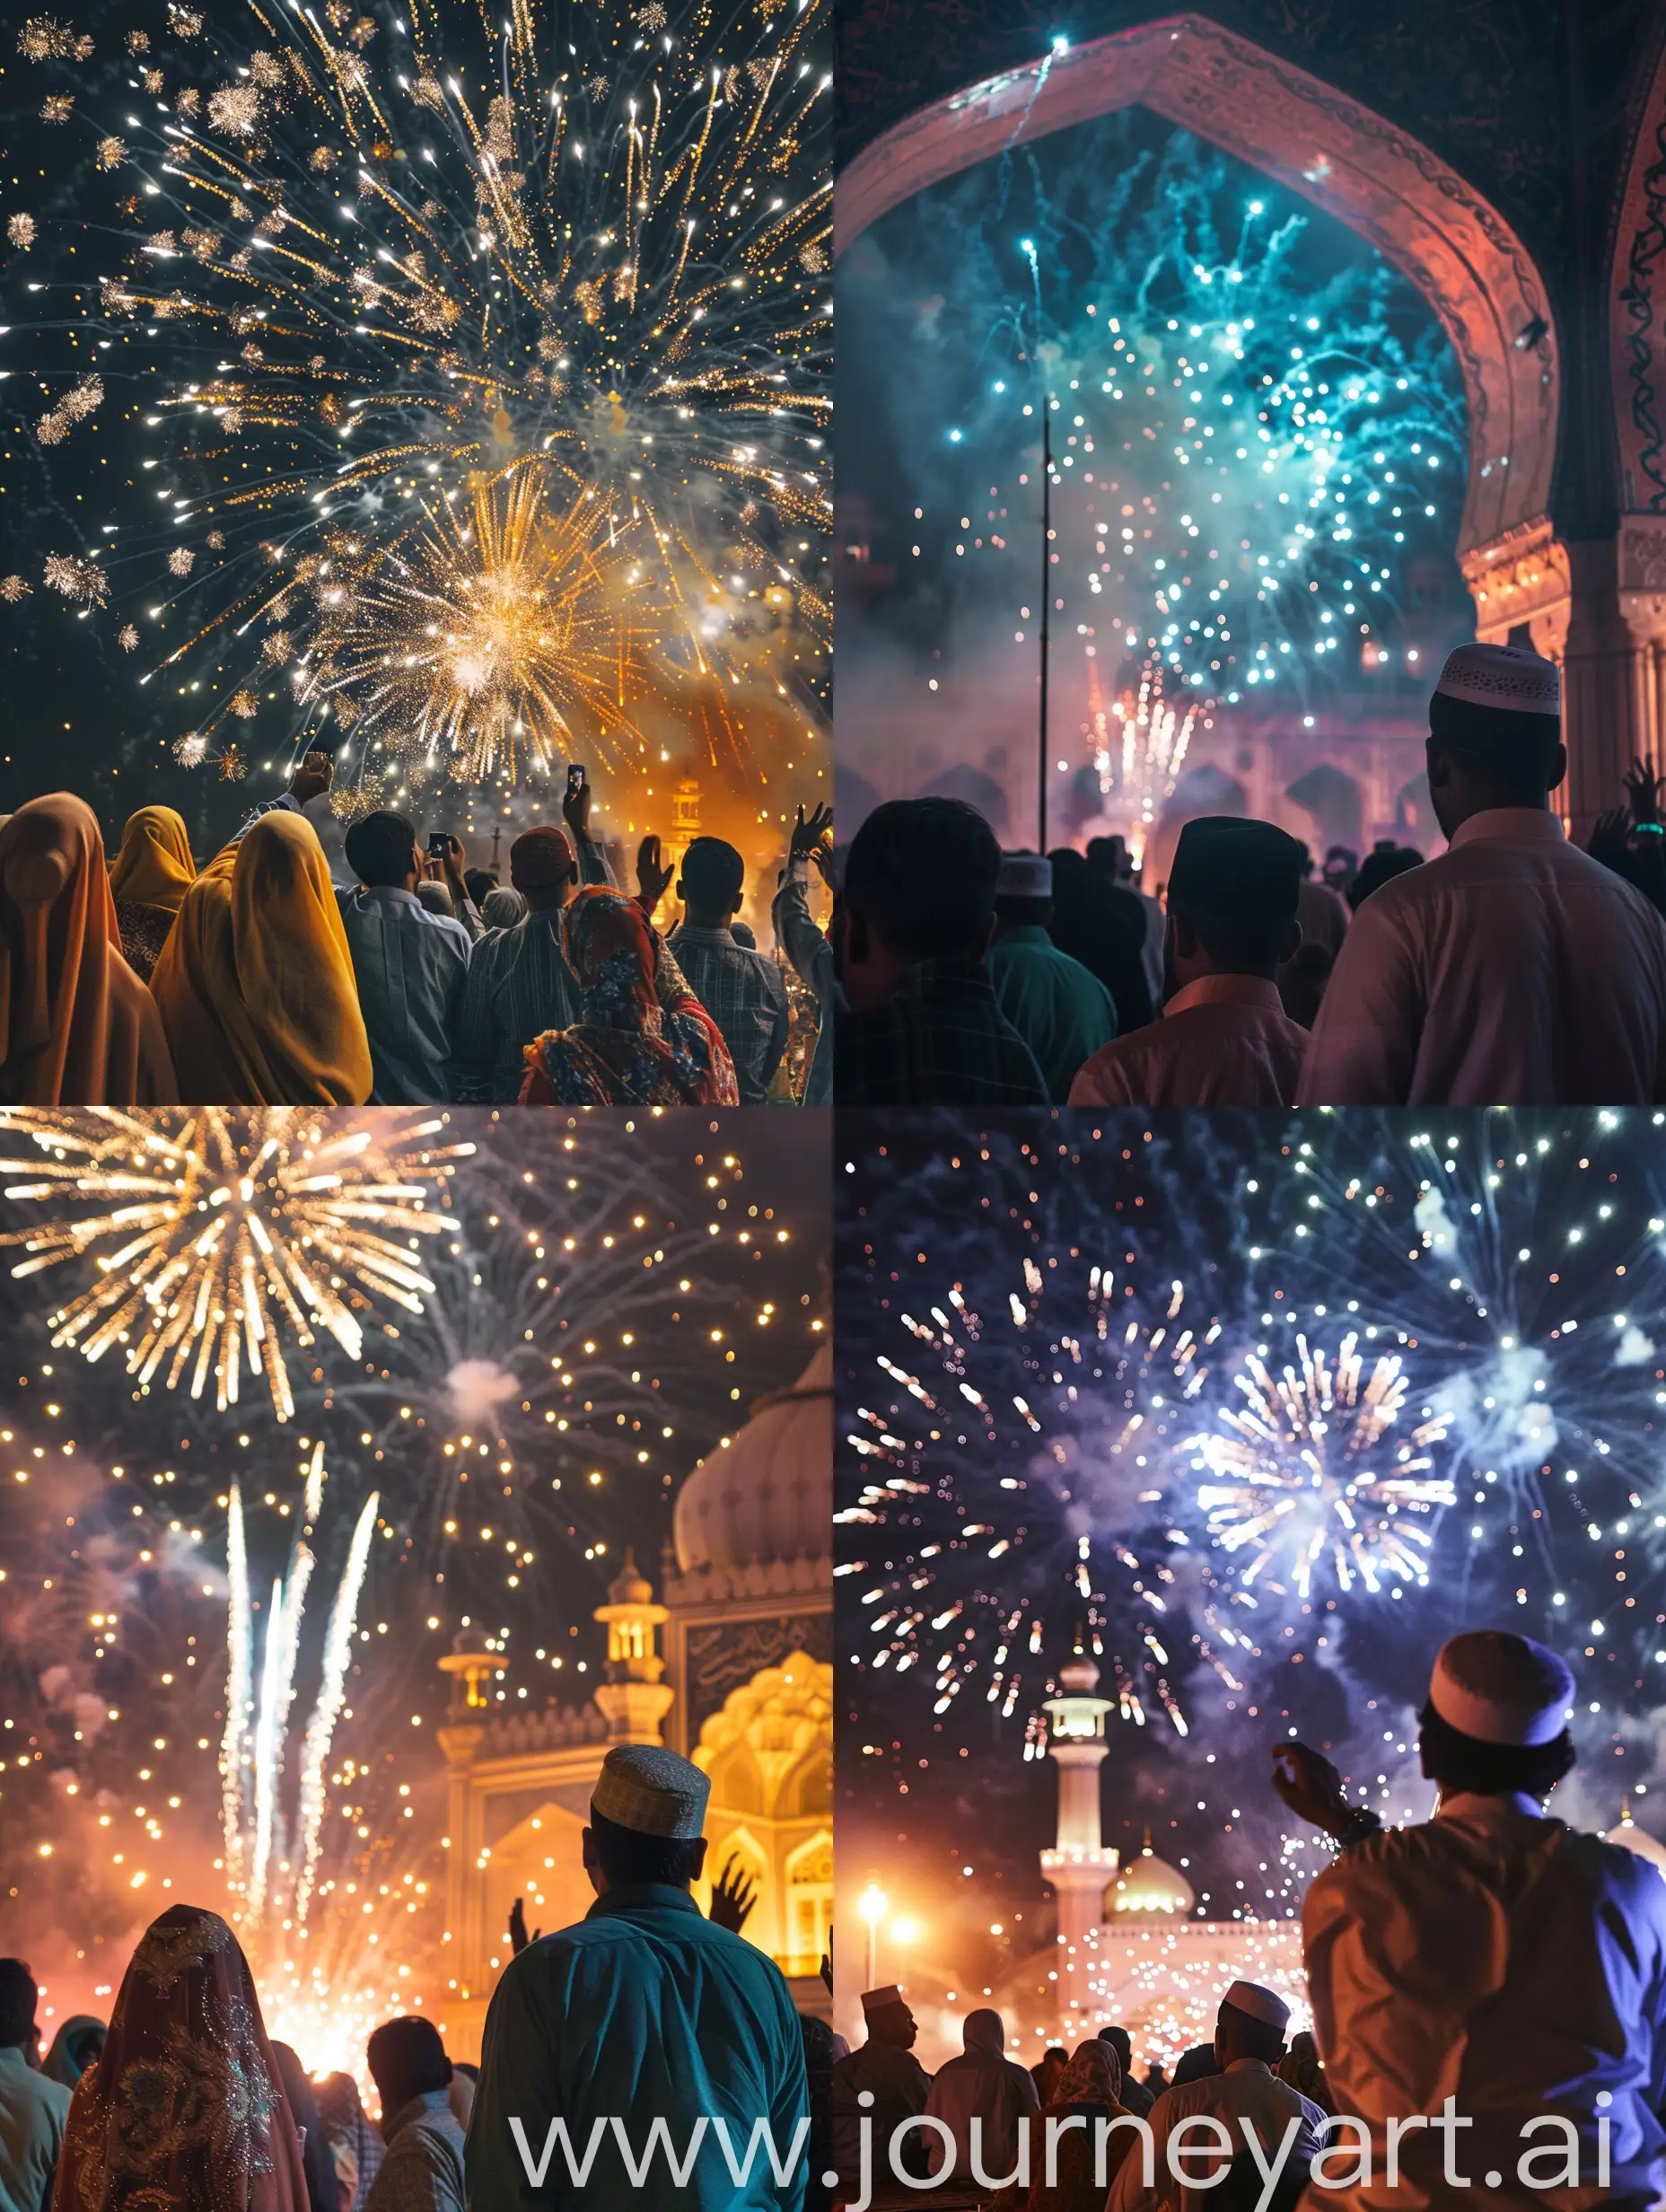 Muslim-People-Enjoying-Vibrant-Fireworks-at-Jamkaran-Mosque